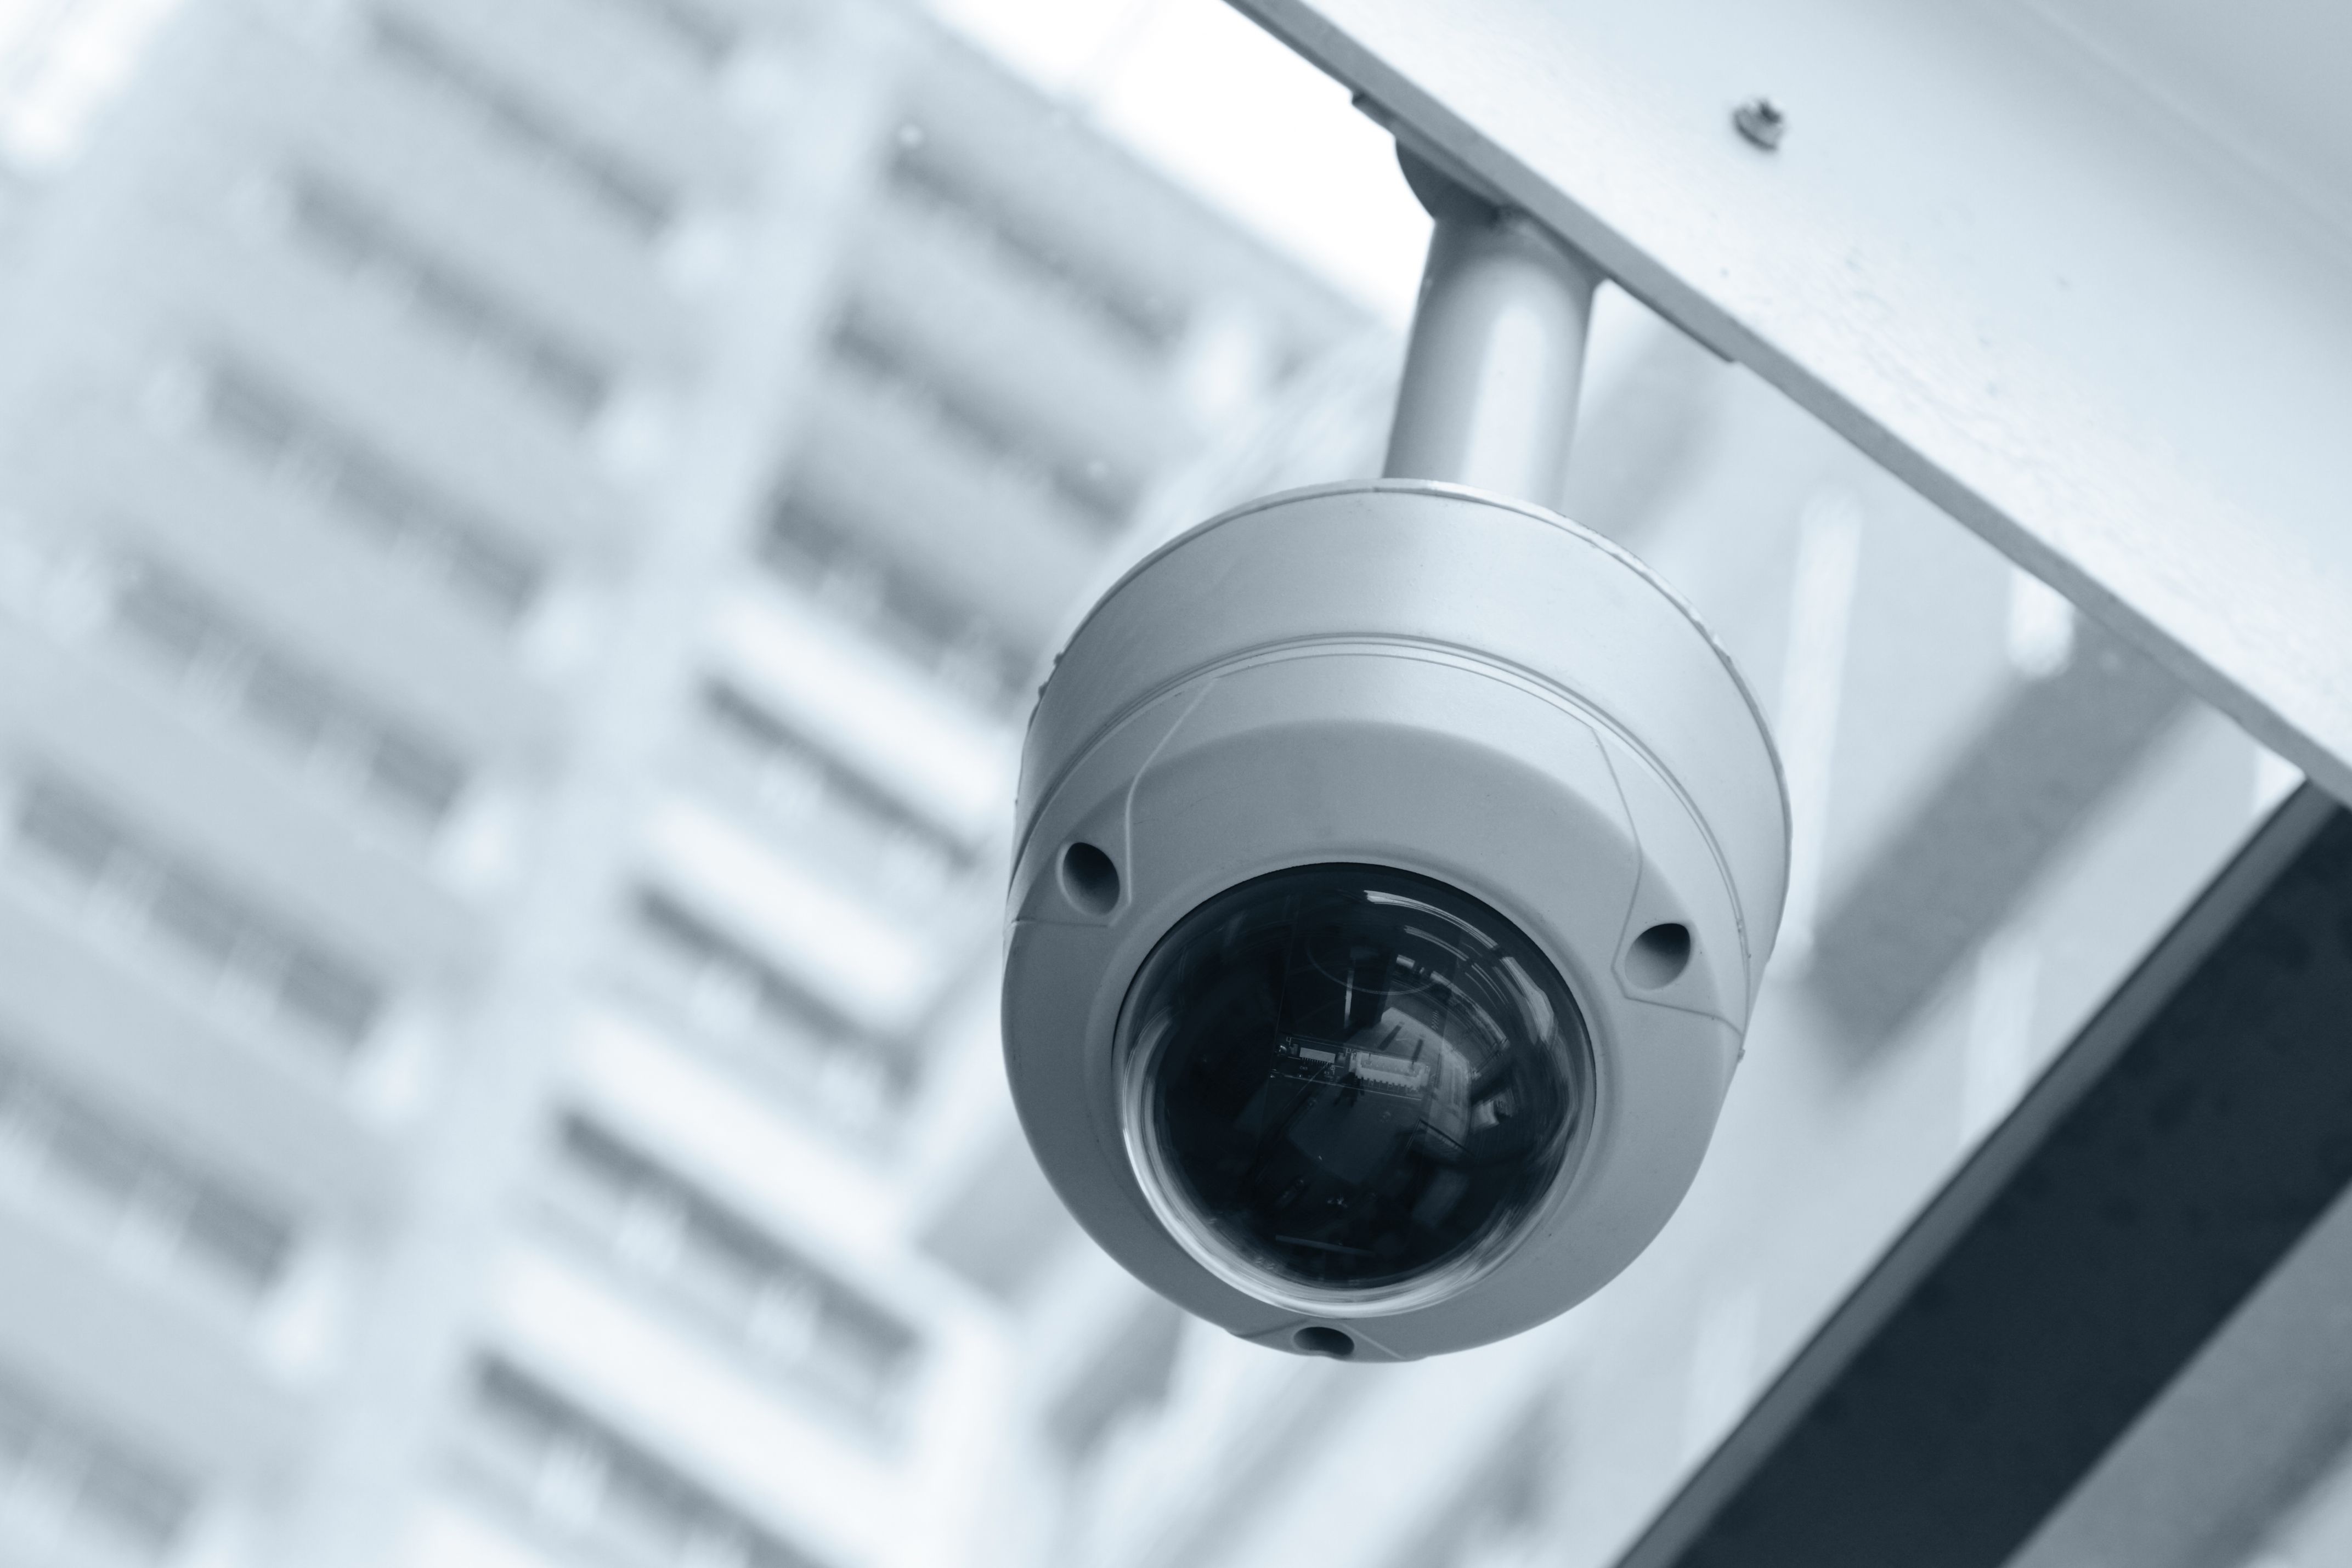 Close up shot of a surveillance camera